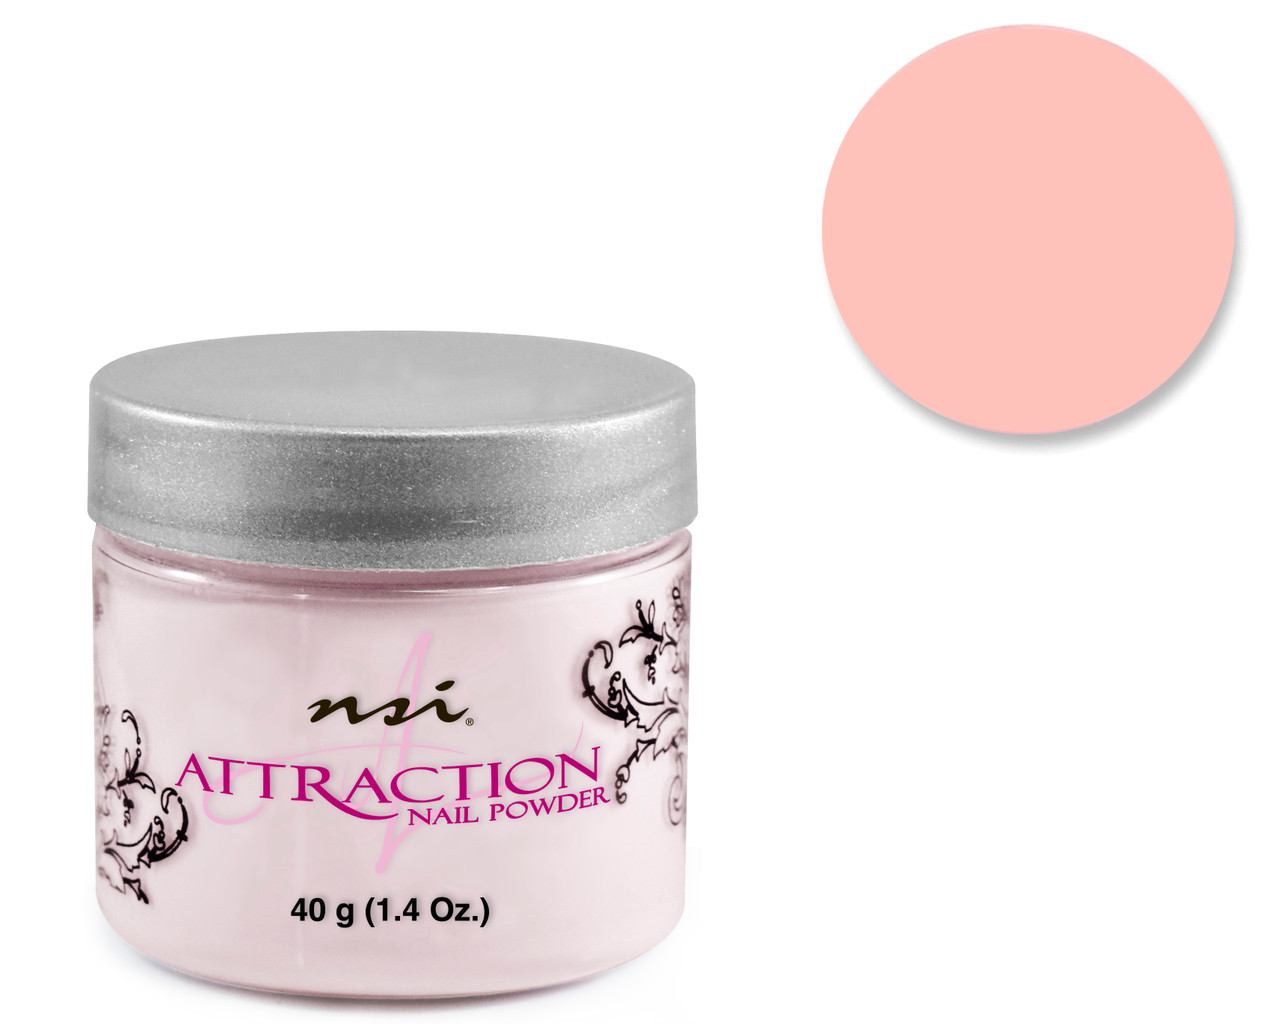 NSI Attraction Nail Powder Dusty Pink - 40 g (1.42 Oz.)